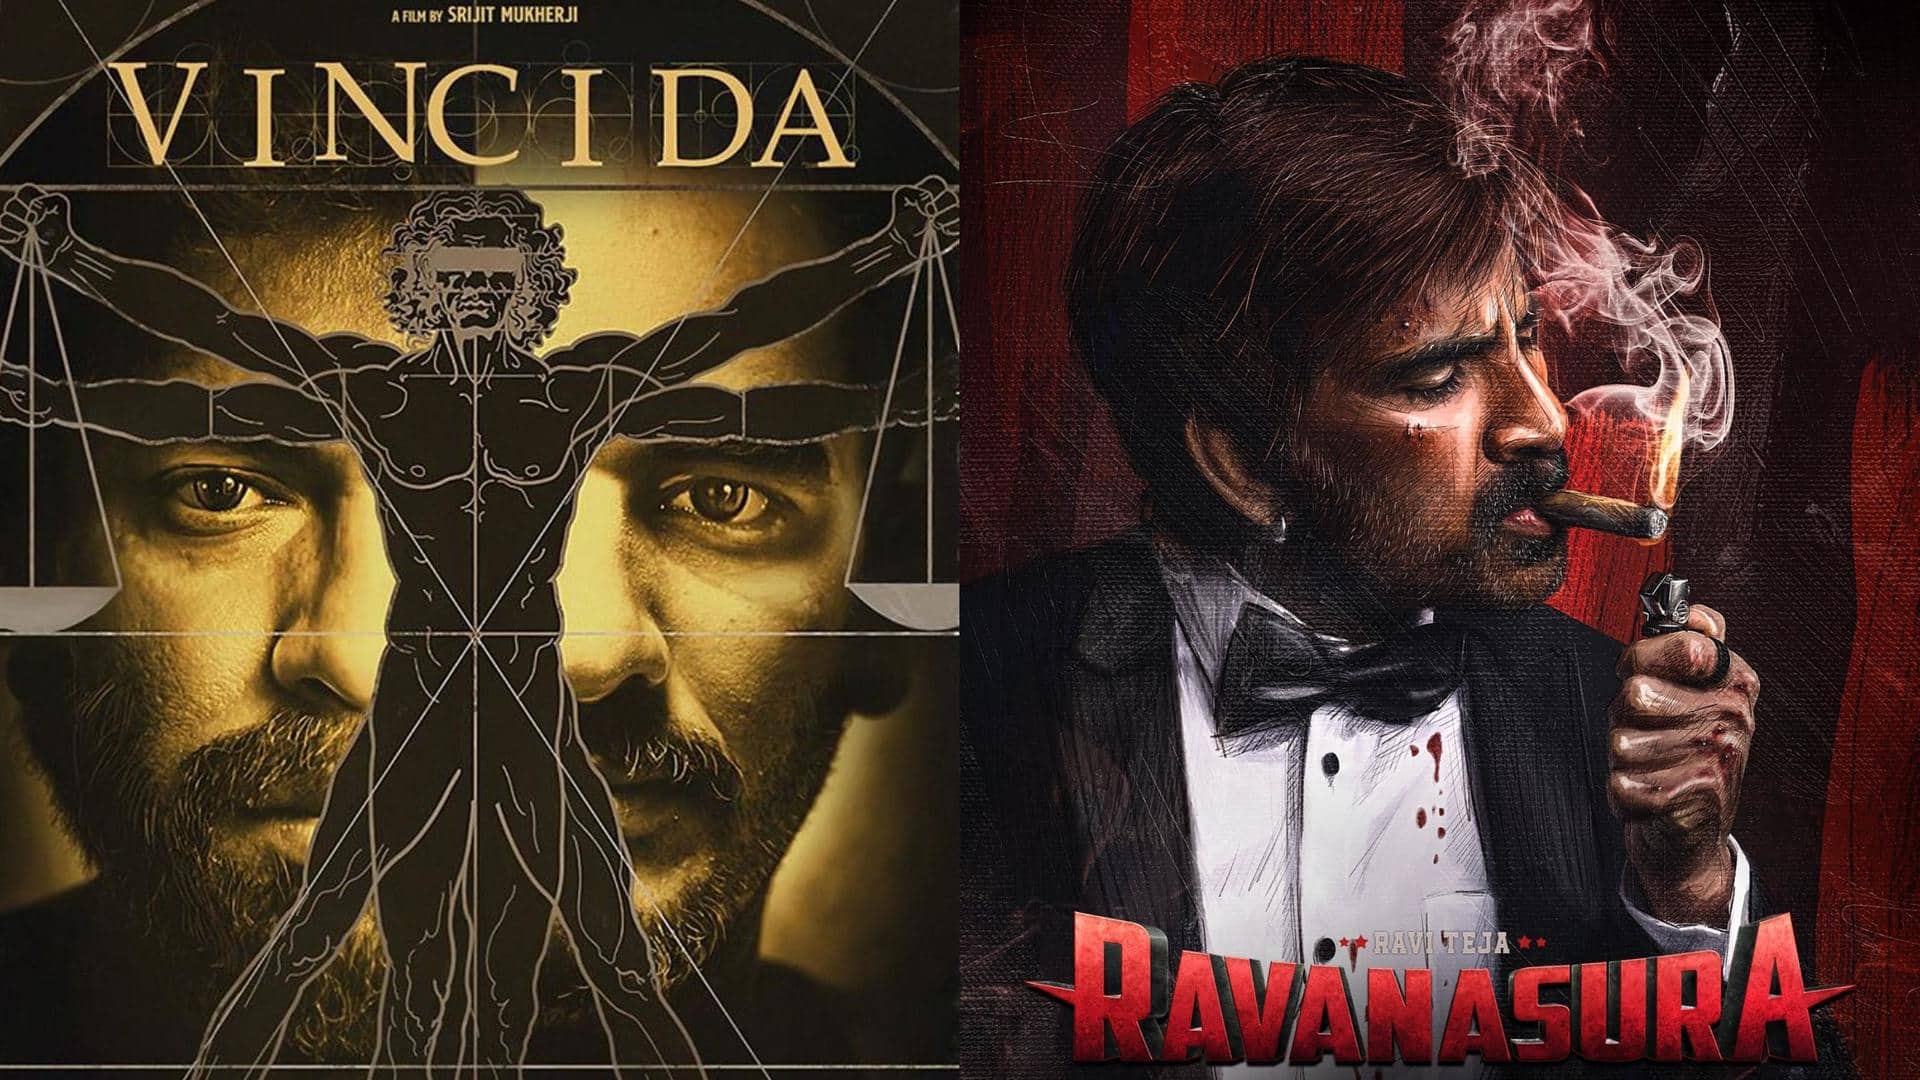 Is 'Ravanasura' a remake of 'Vinci Da'? Srijit Mukherji reacts